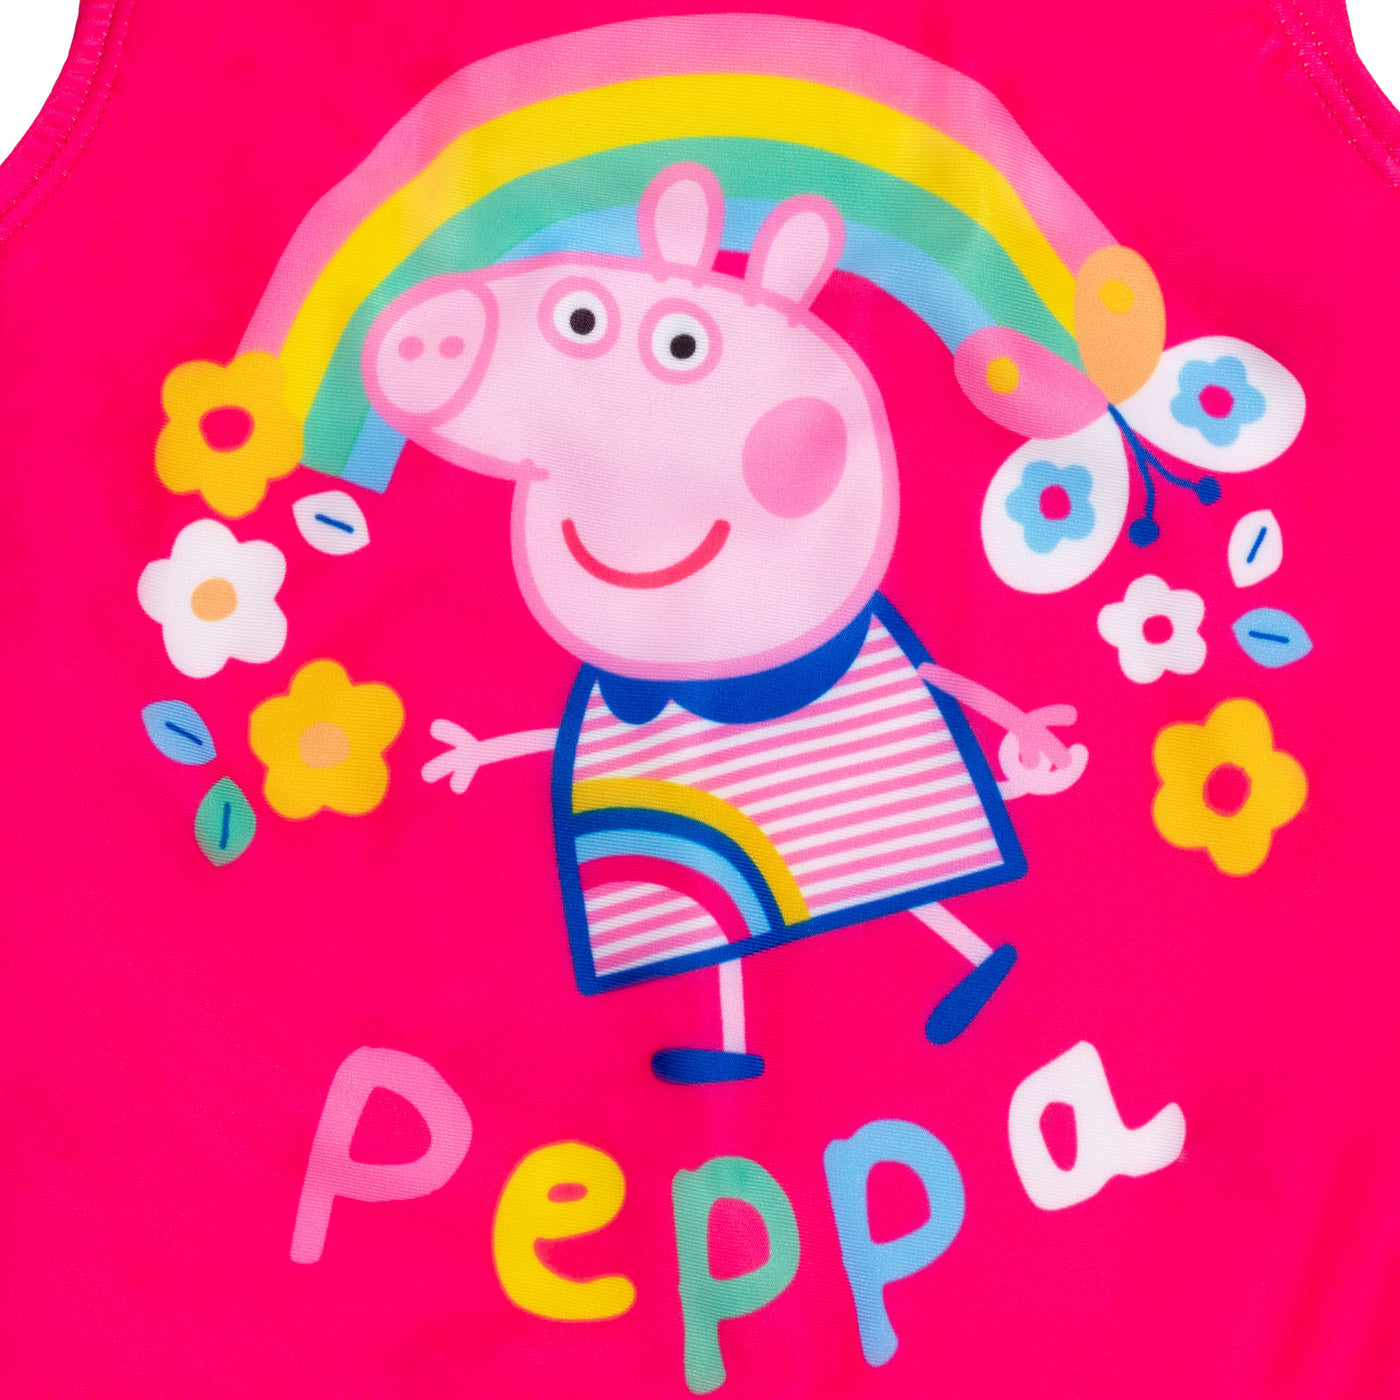 Peppa Pig One Piece Bathing Suit